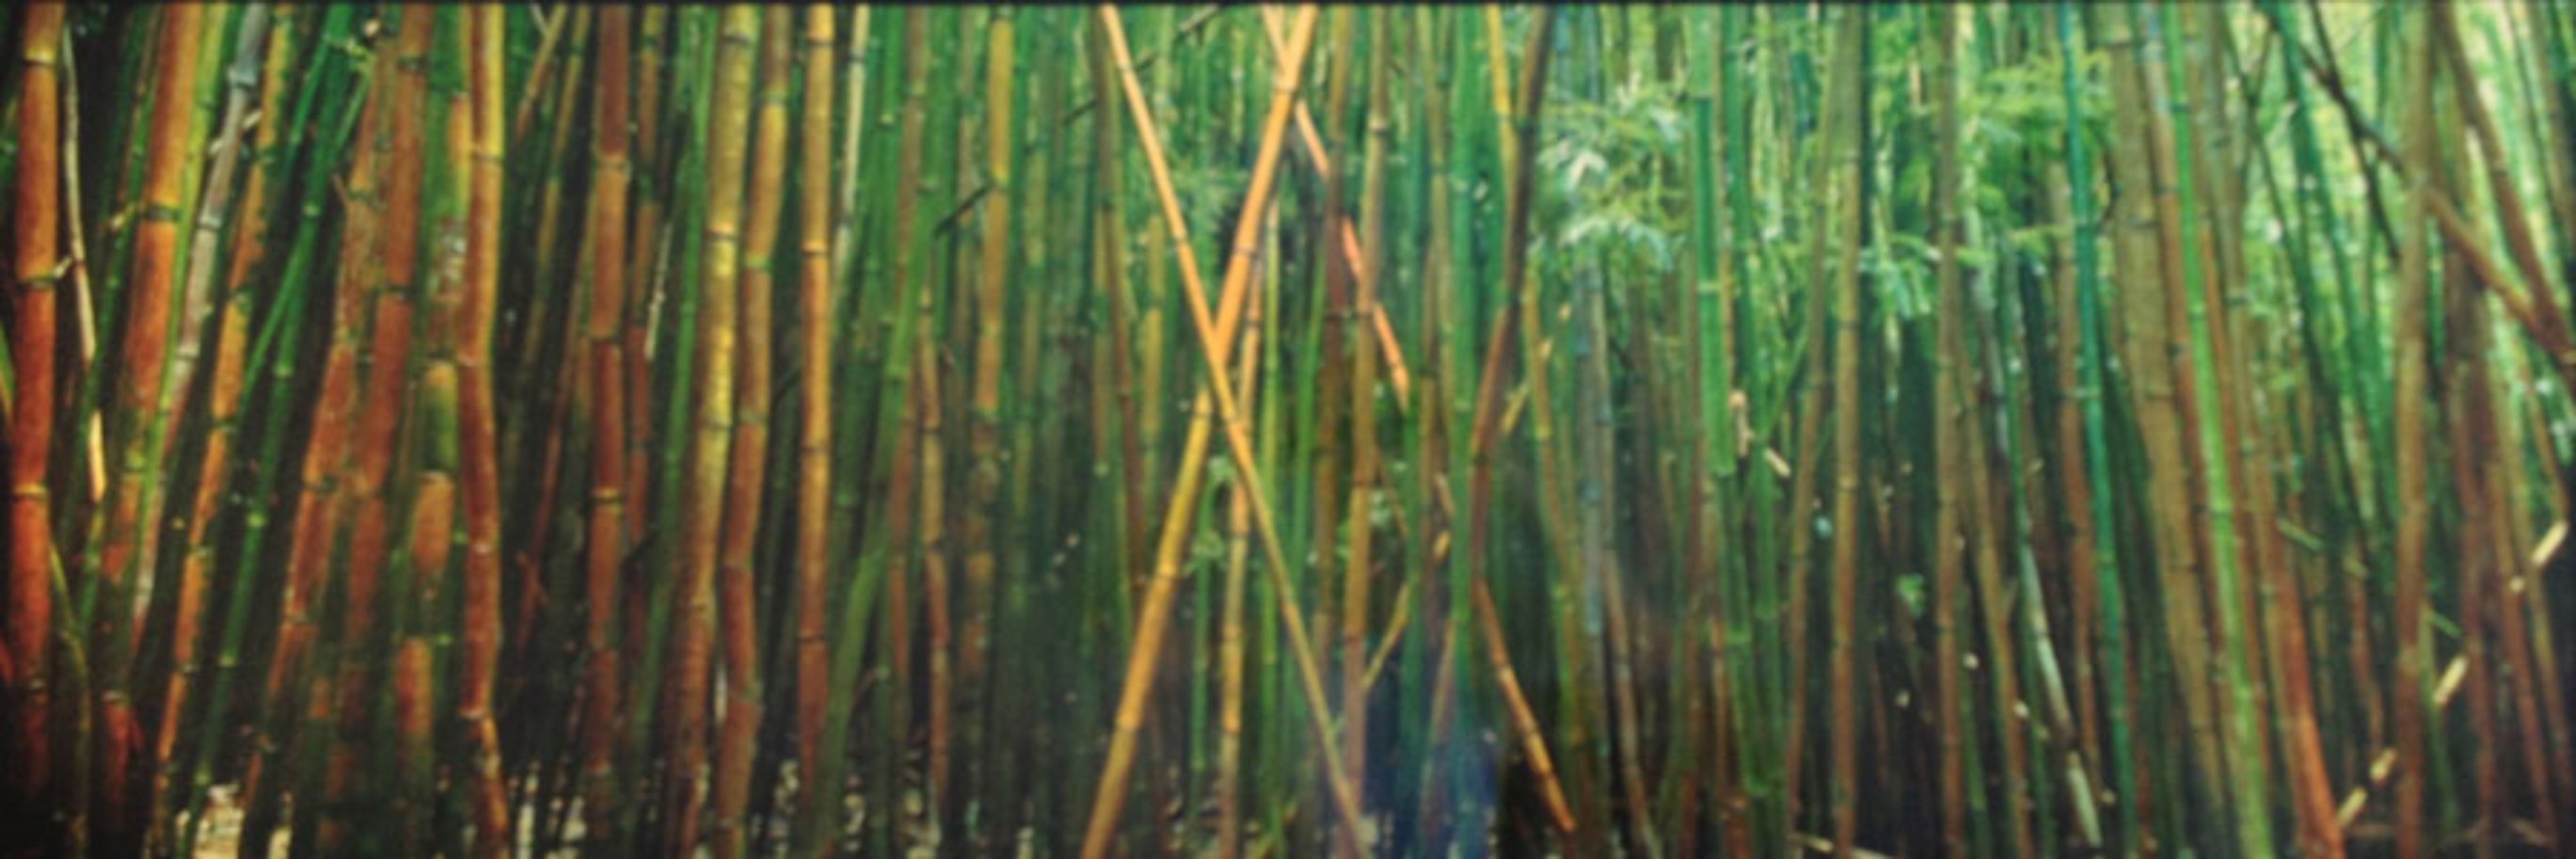 Bamboo (Pipiwai Trail, Hana, Hawaii) 1.5M Huge Panorama by Peter Lik